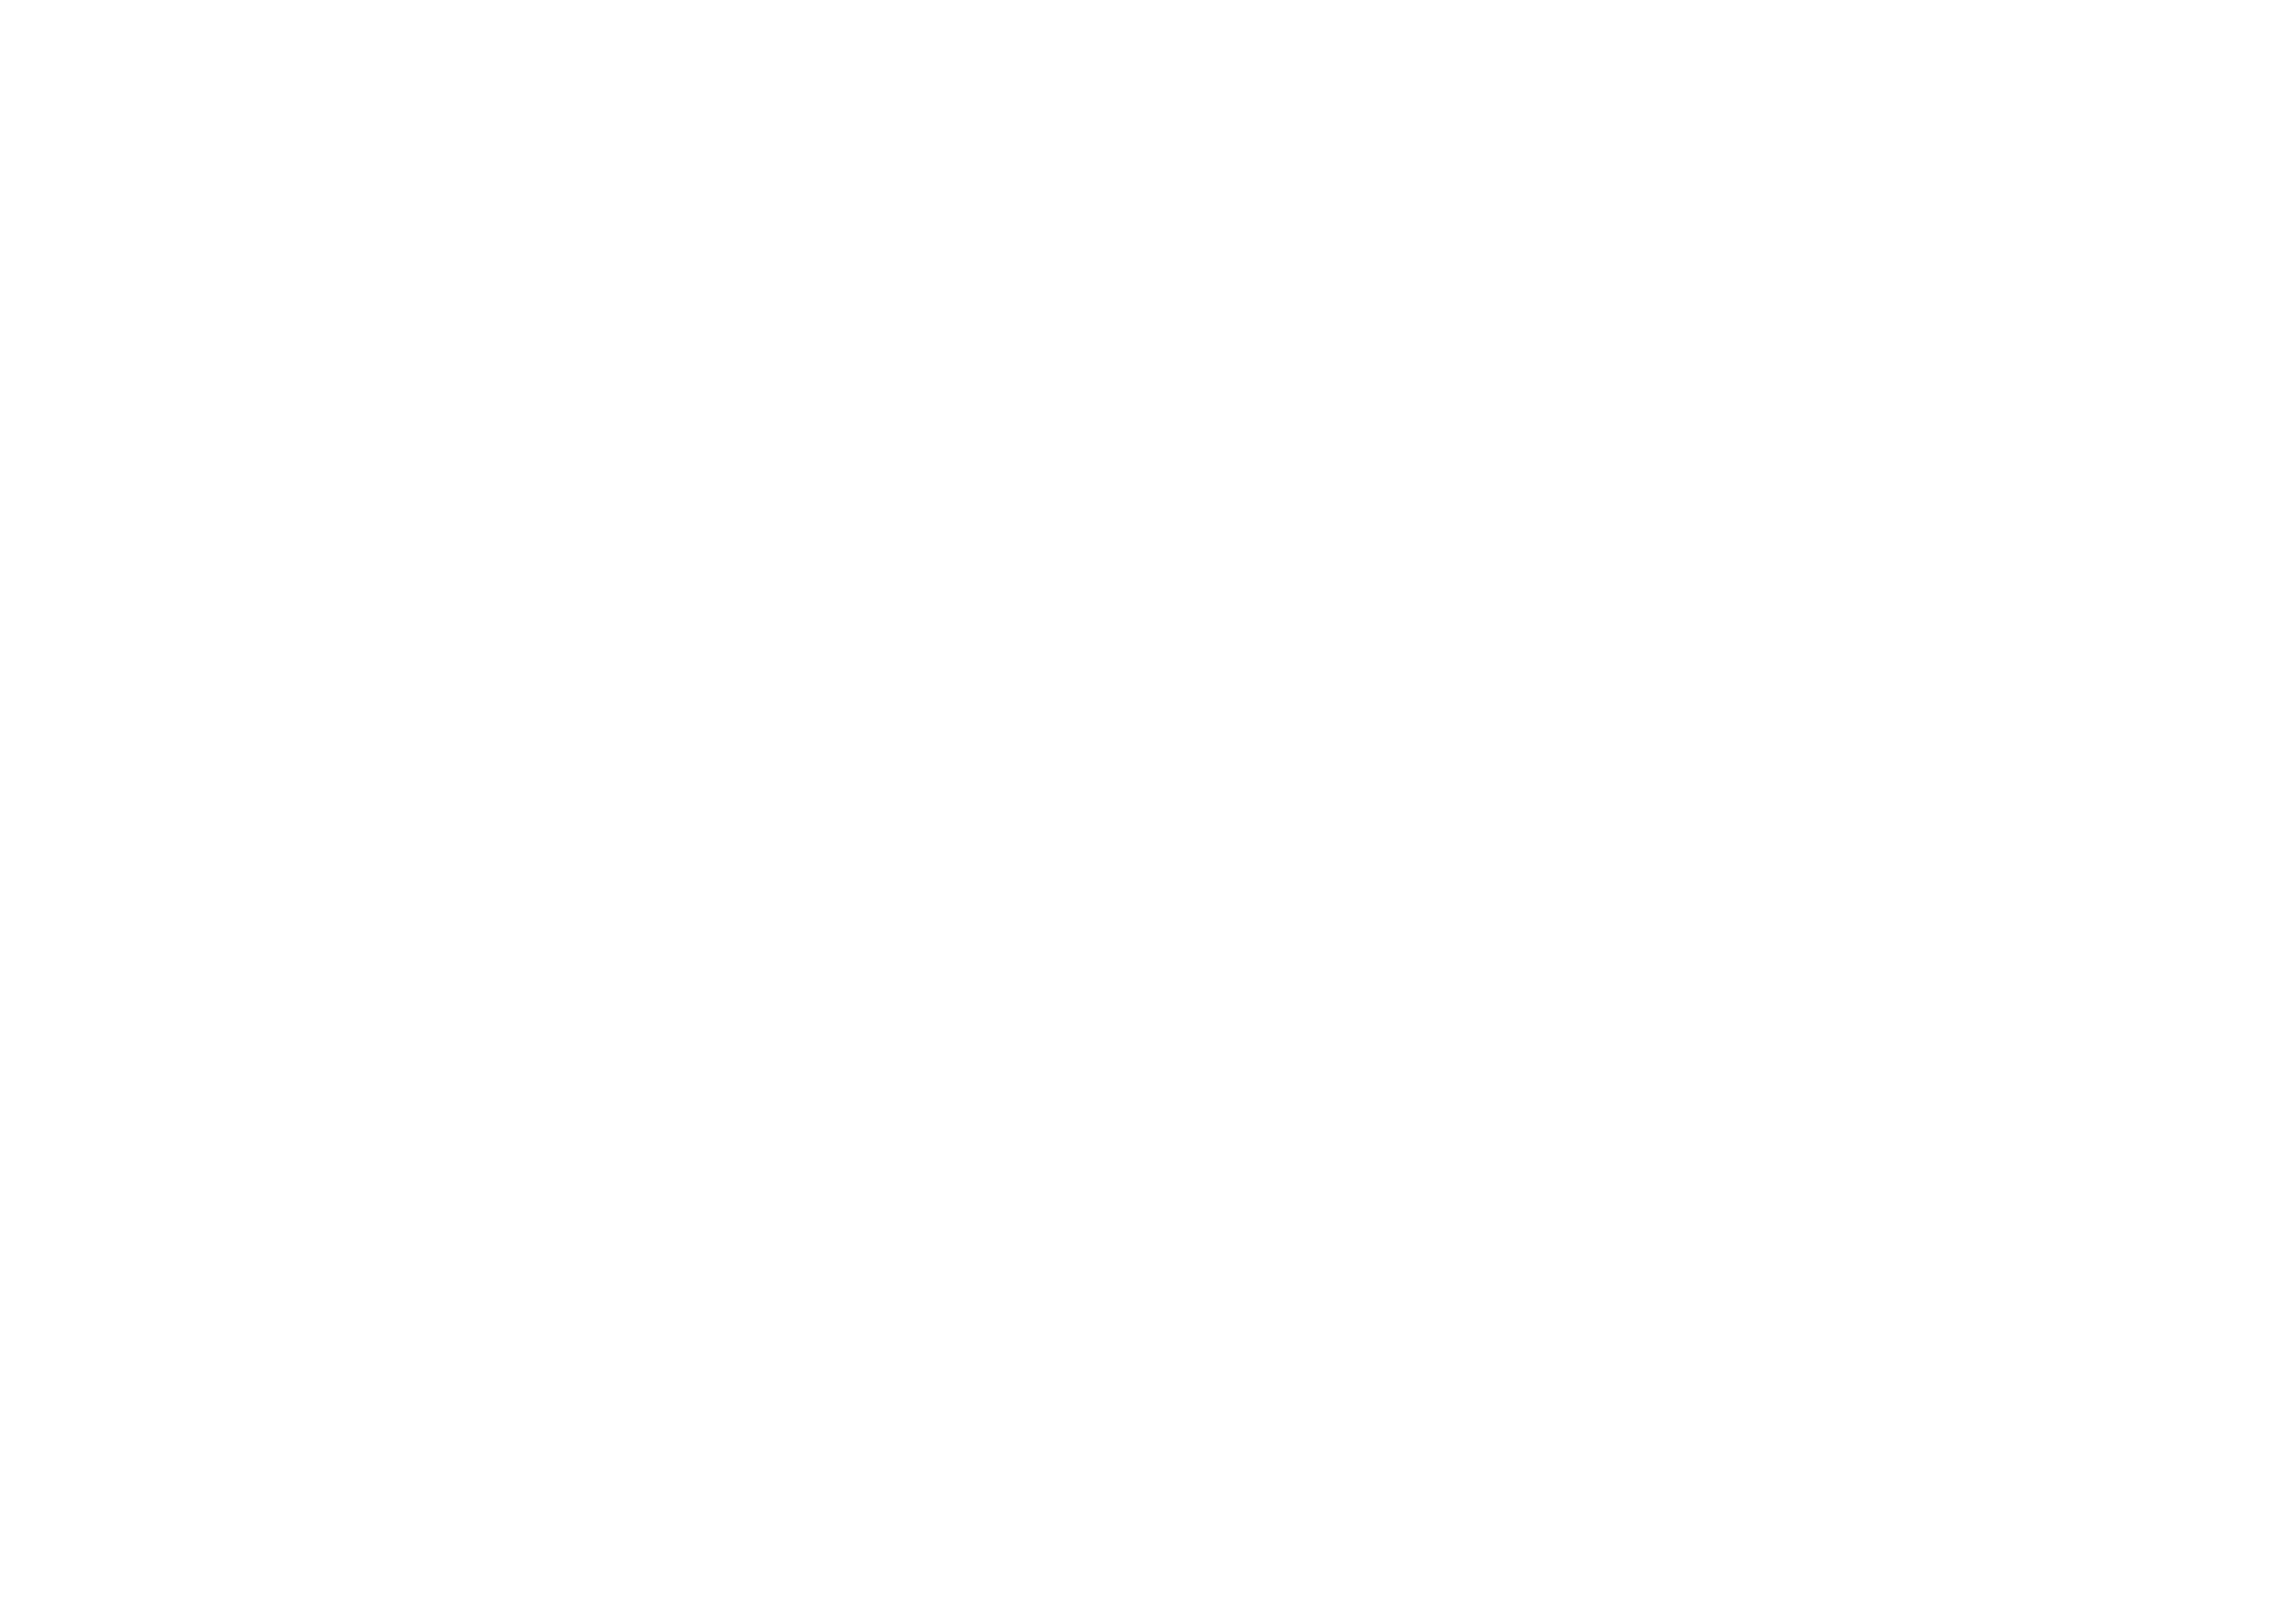 Alex Rockwell